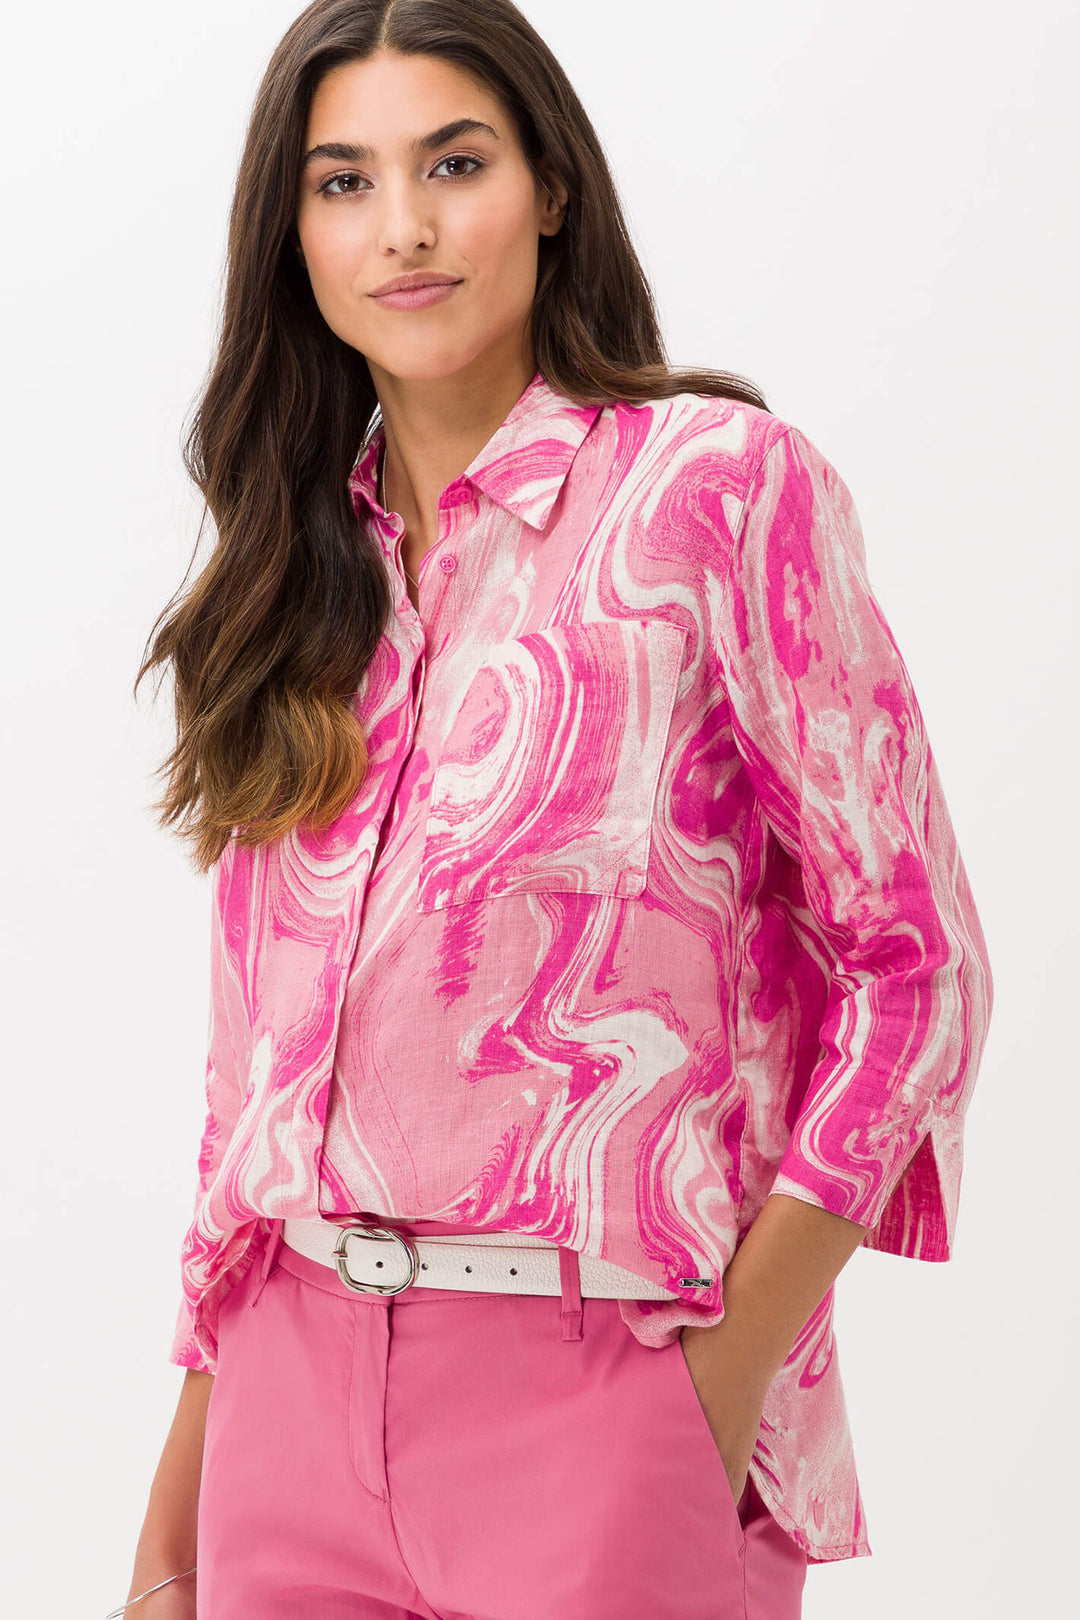 Brax Vicki 42-7578-85 9412170 Flush Pink Print Shirt - Olivia Grace Fashion